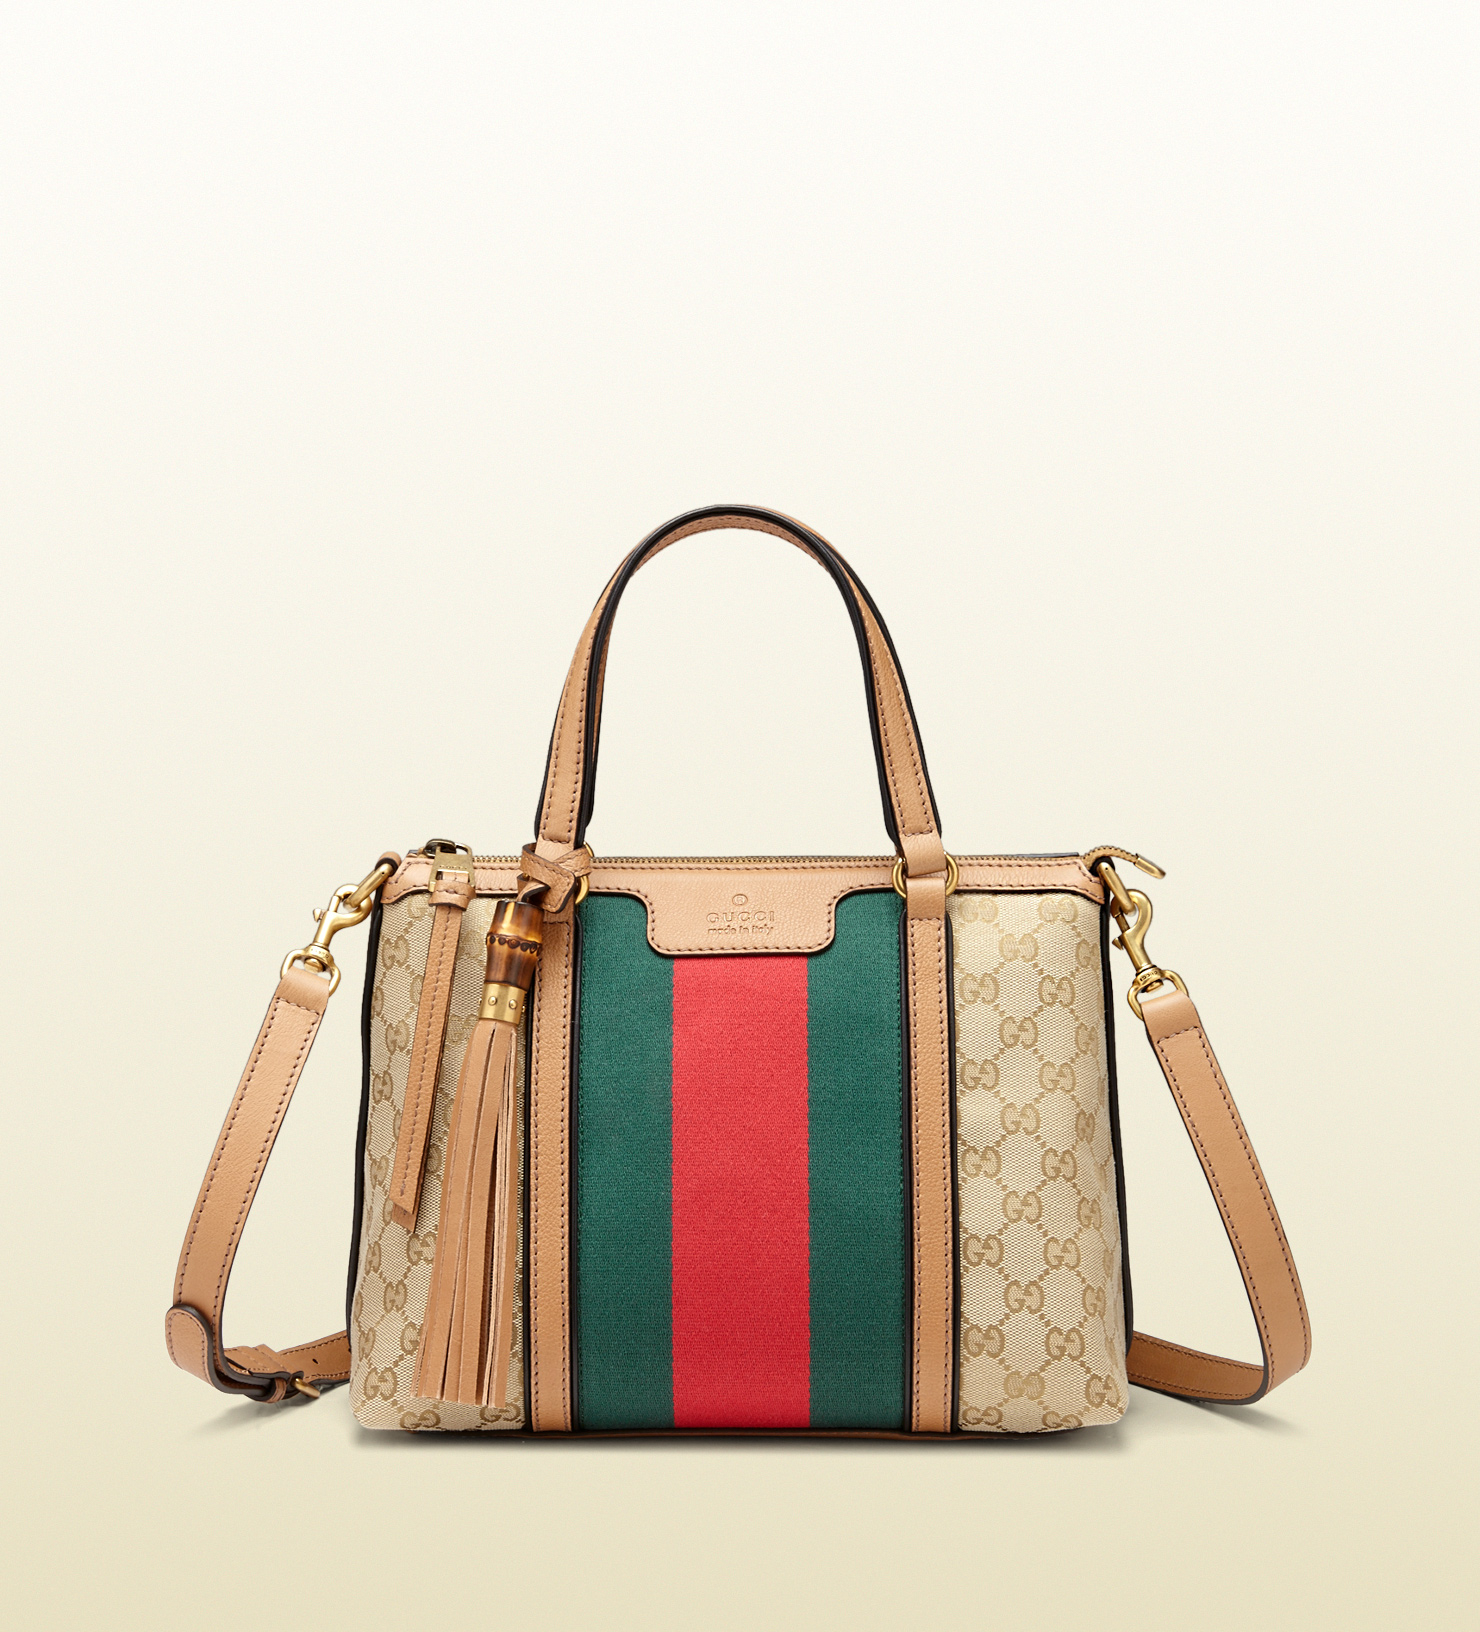 Lyst - Gucci Rania Original Gg Canvas Top Handle Bag in Natural